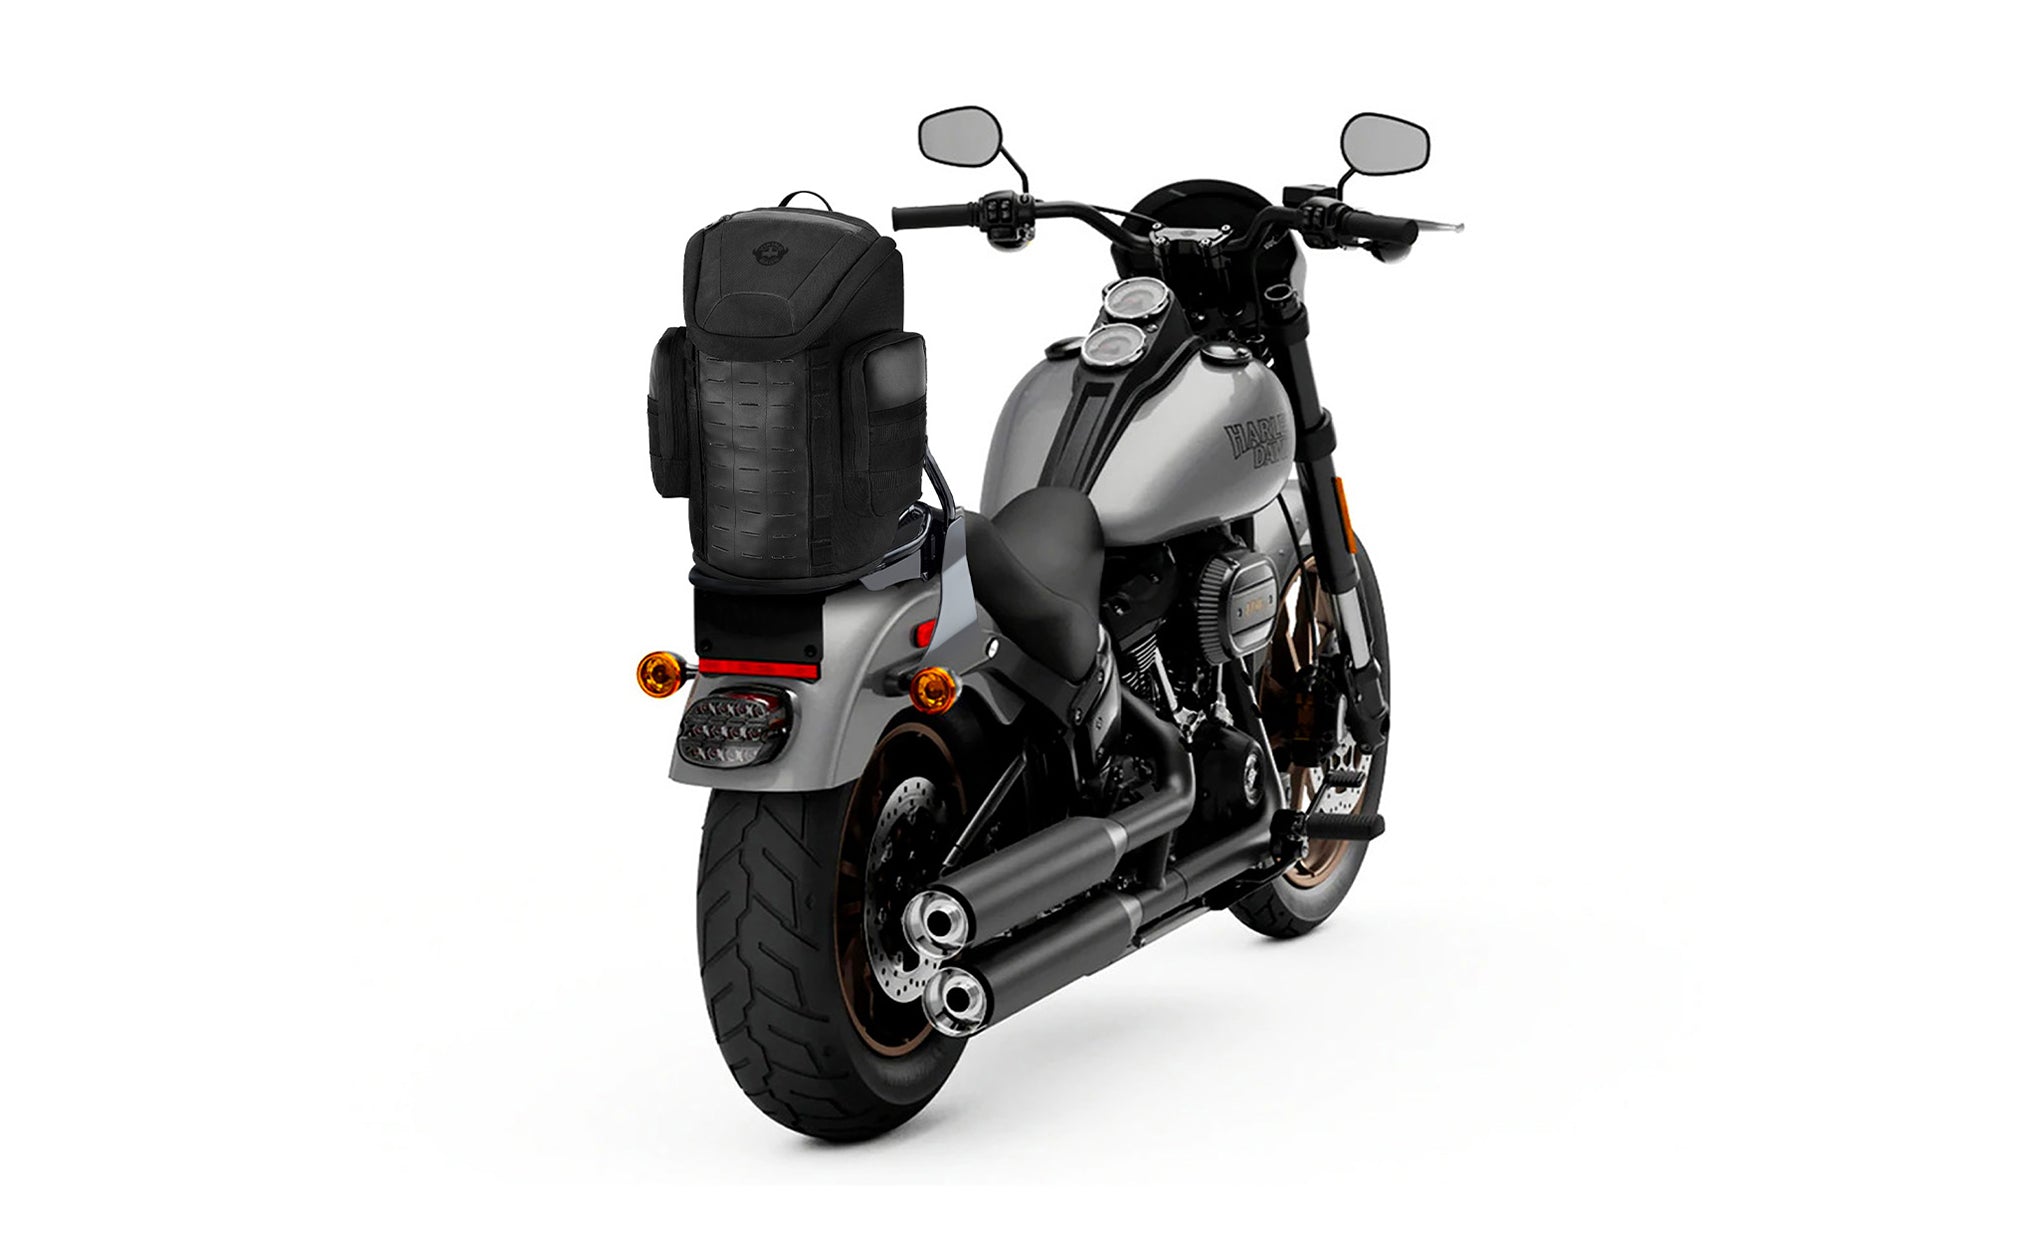 Viking Patriot Medium Motorcycle Backpack for Harley Davidson Bag on Bike View @expand